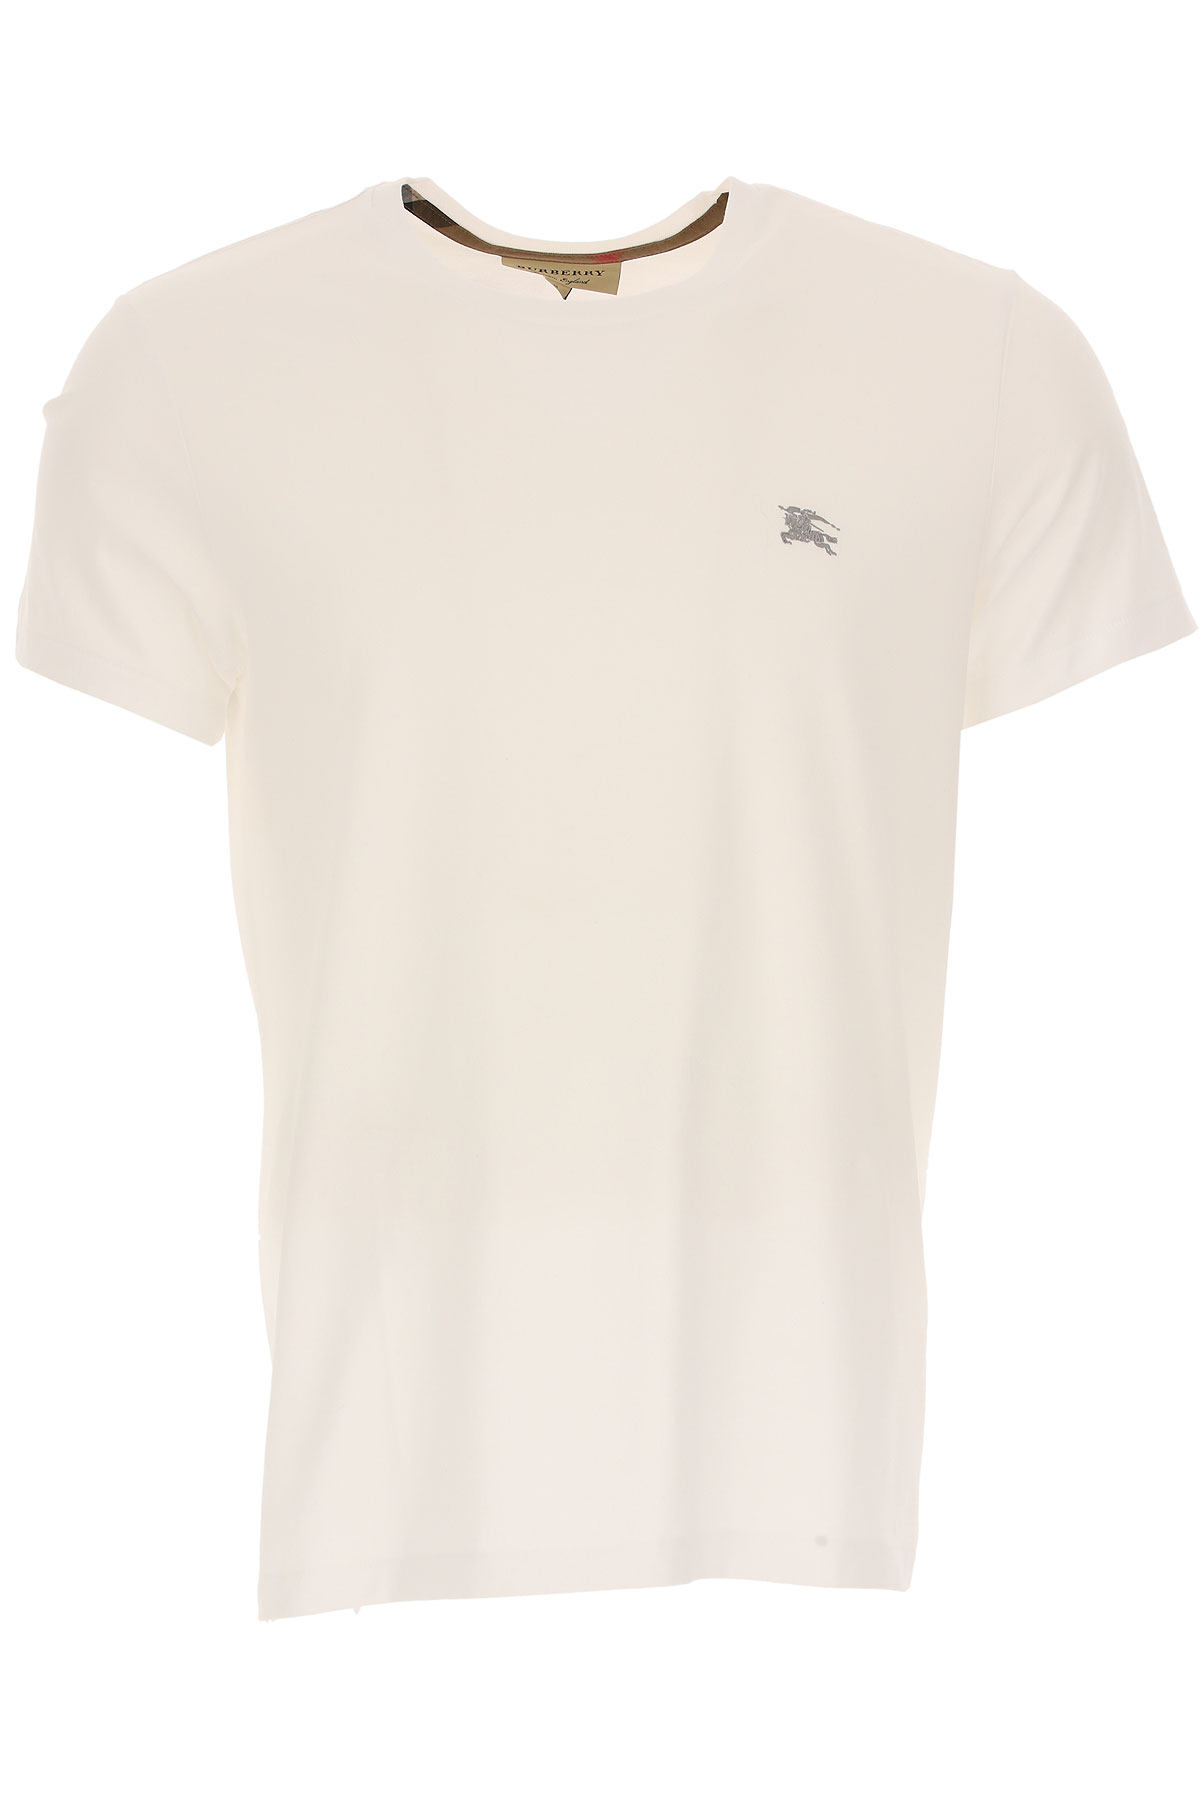 Burberry T-shirt Homme, Blanc, Coton, 2017, L M S XL XS XXL